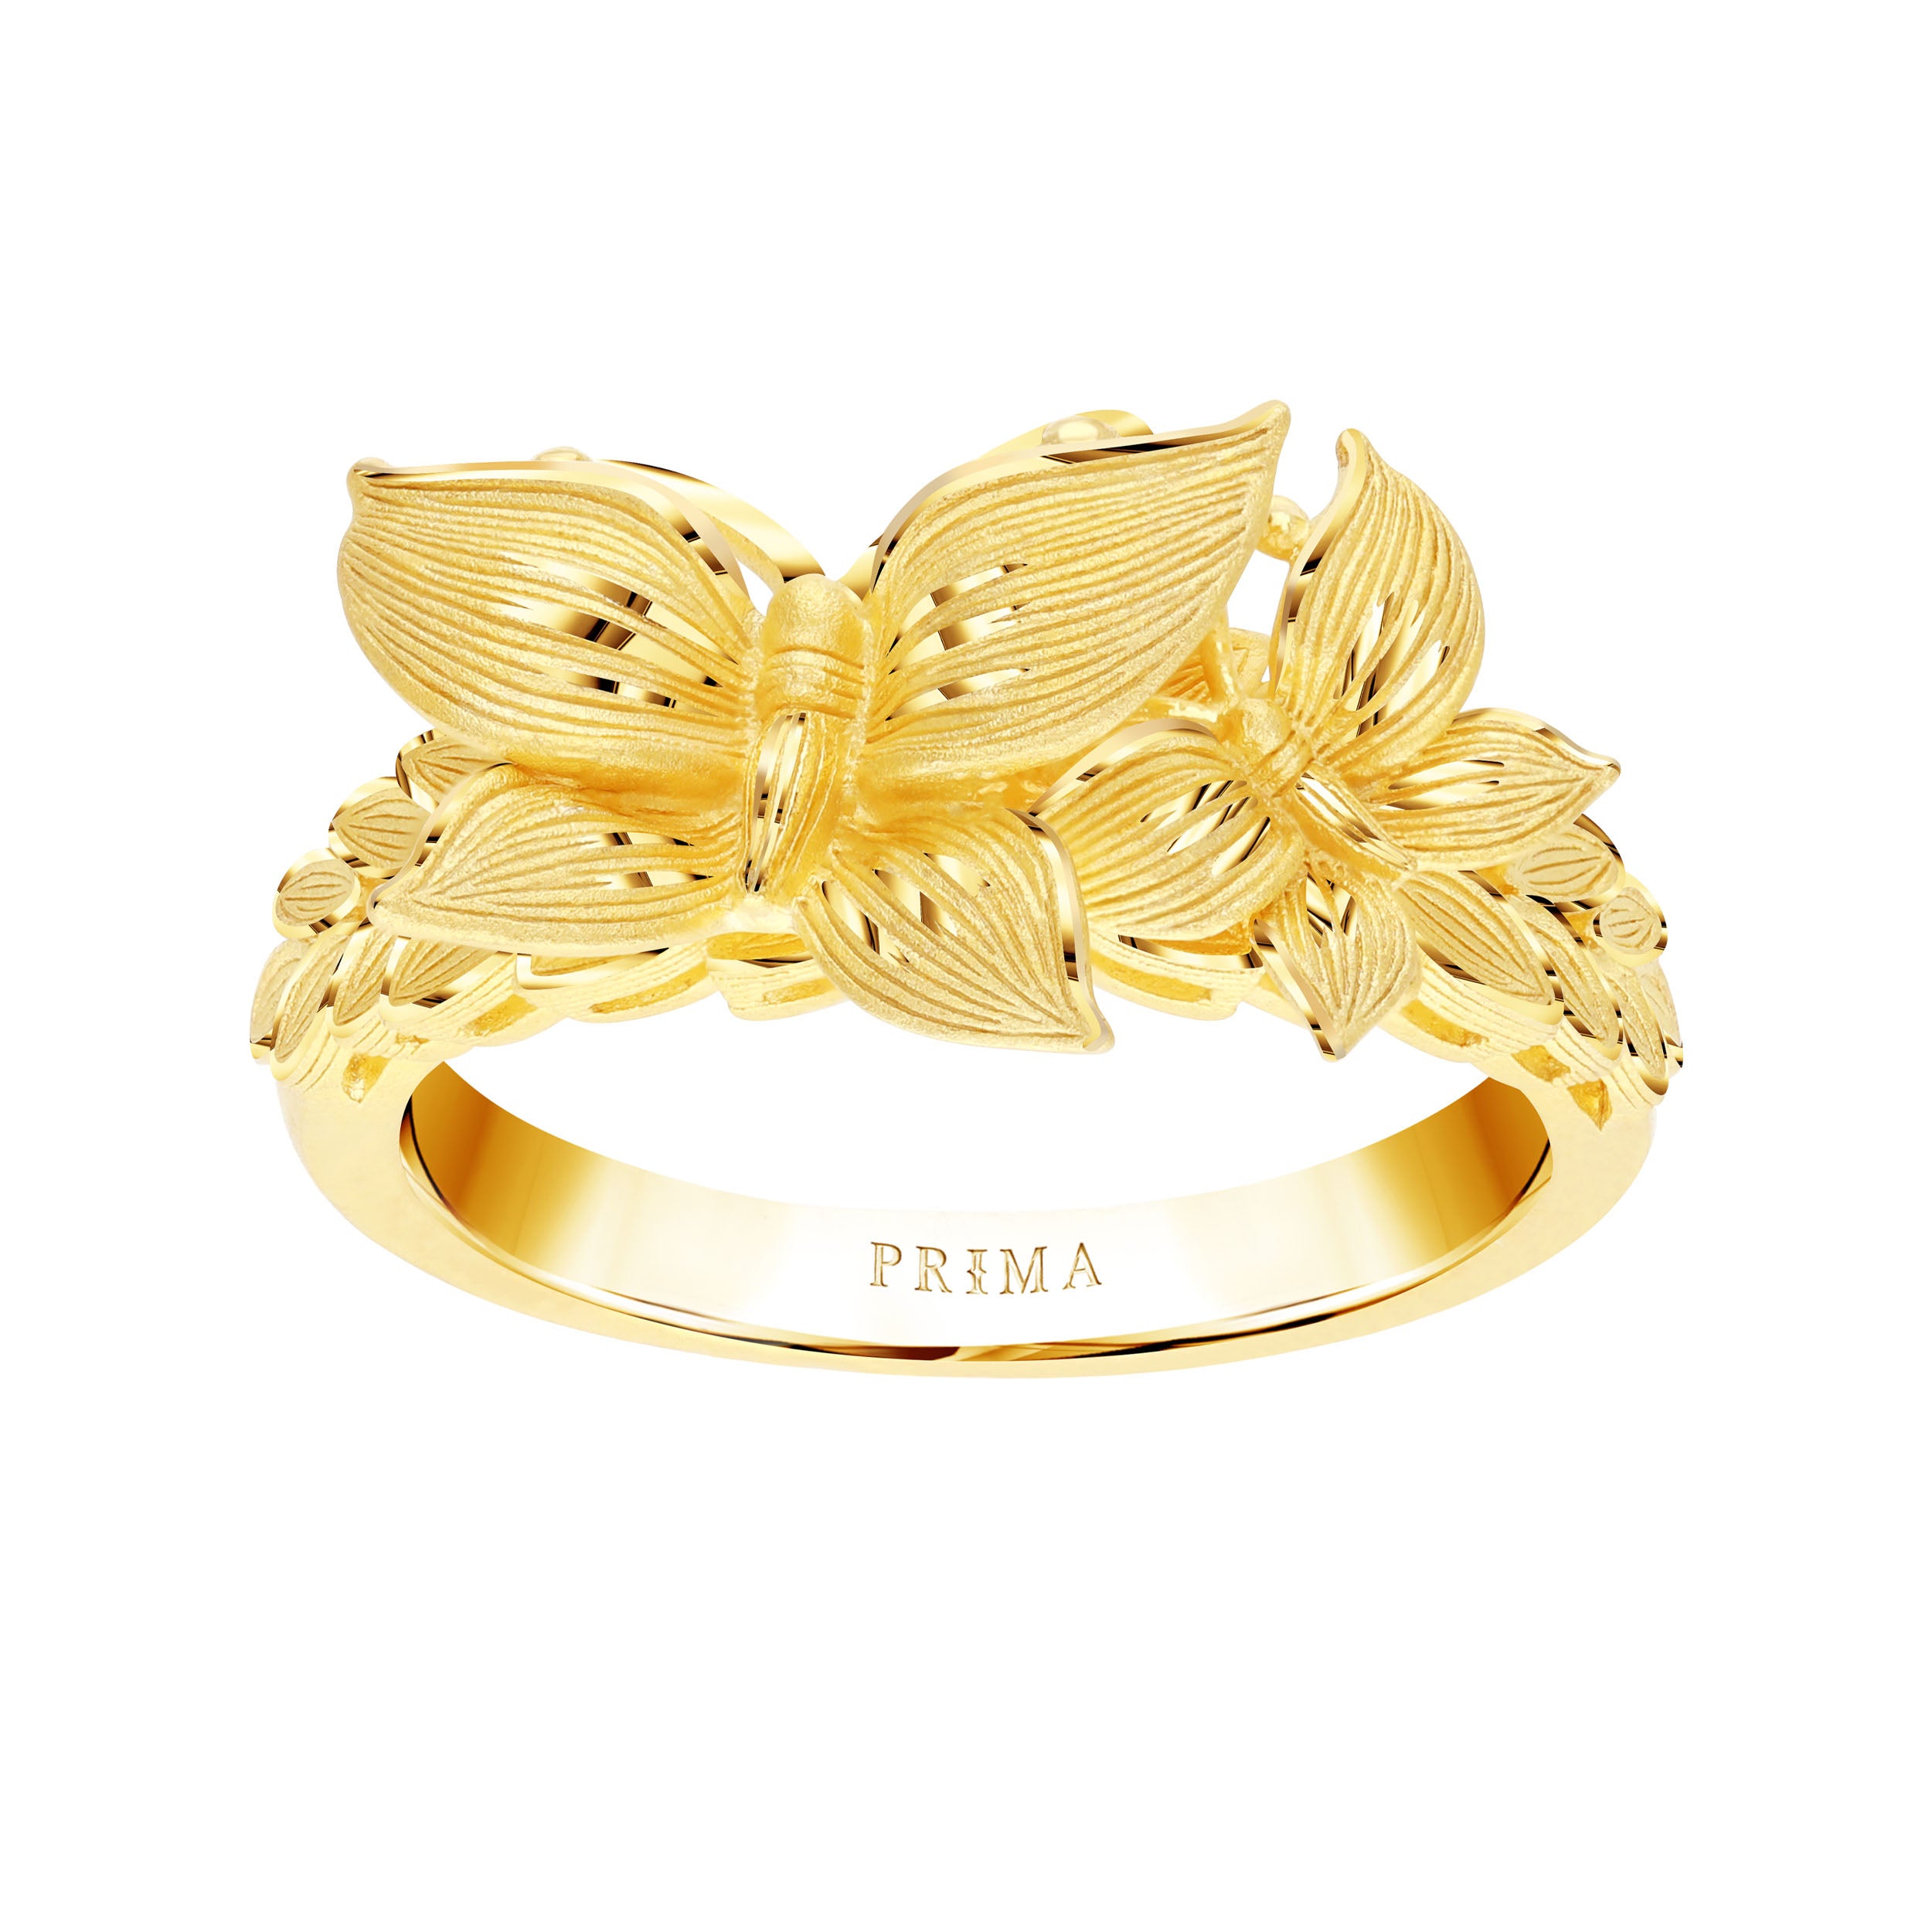 100k Gold|24k Gold Plated Wedding Band For Women - Arabesque Prong Setting  Ring